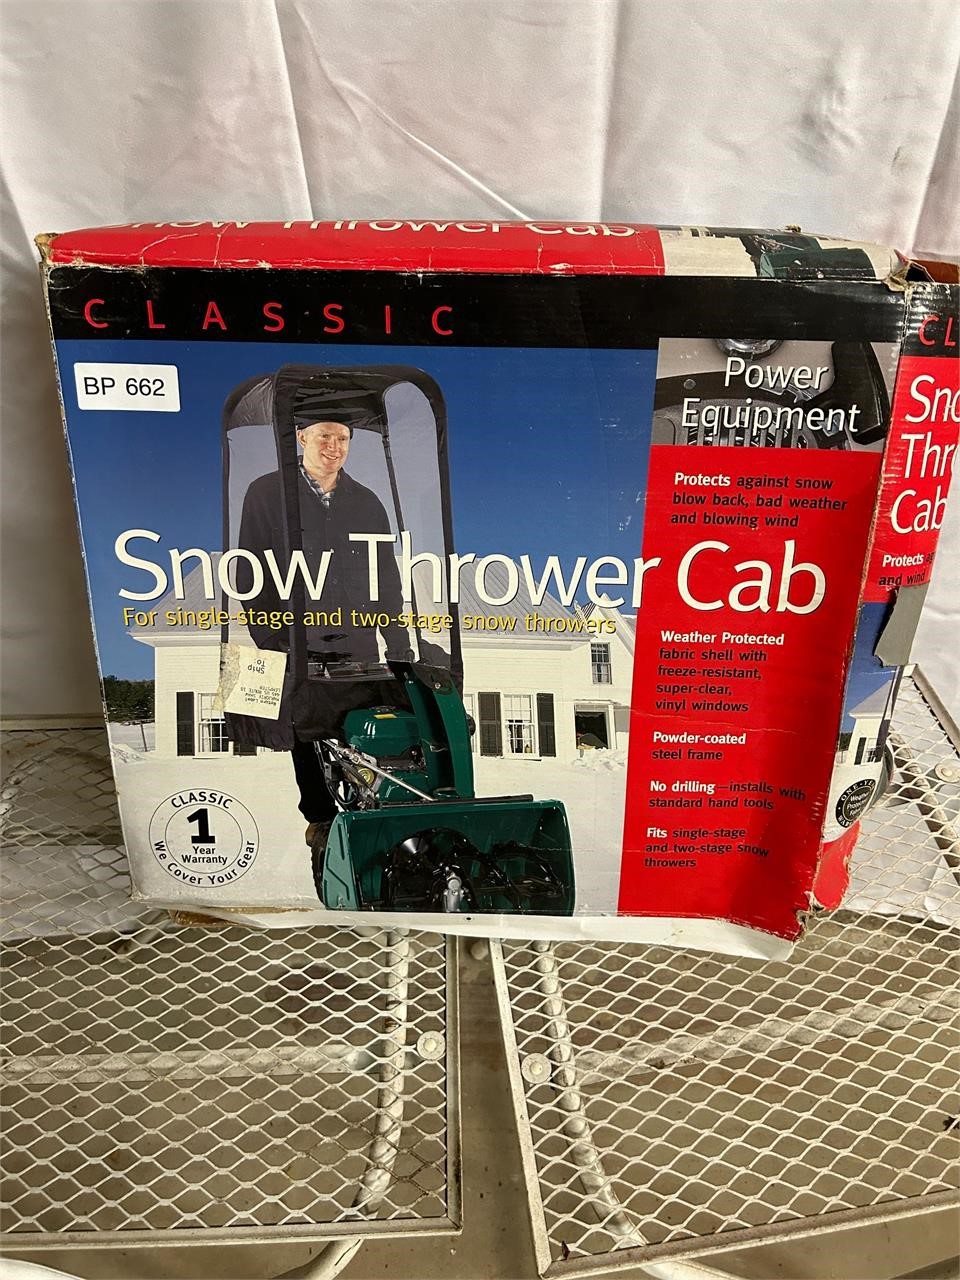 Snow Thrower Cab